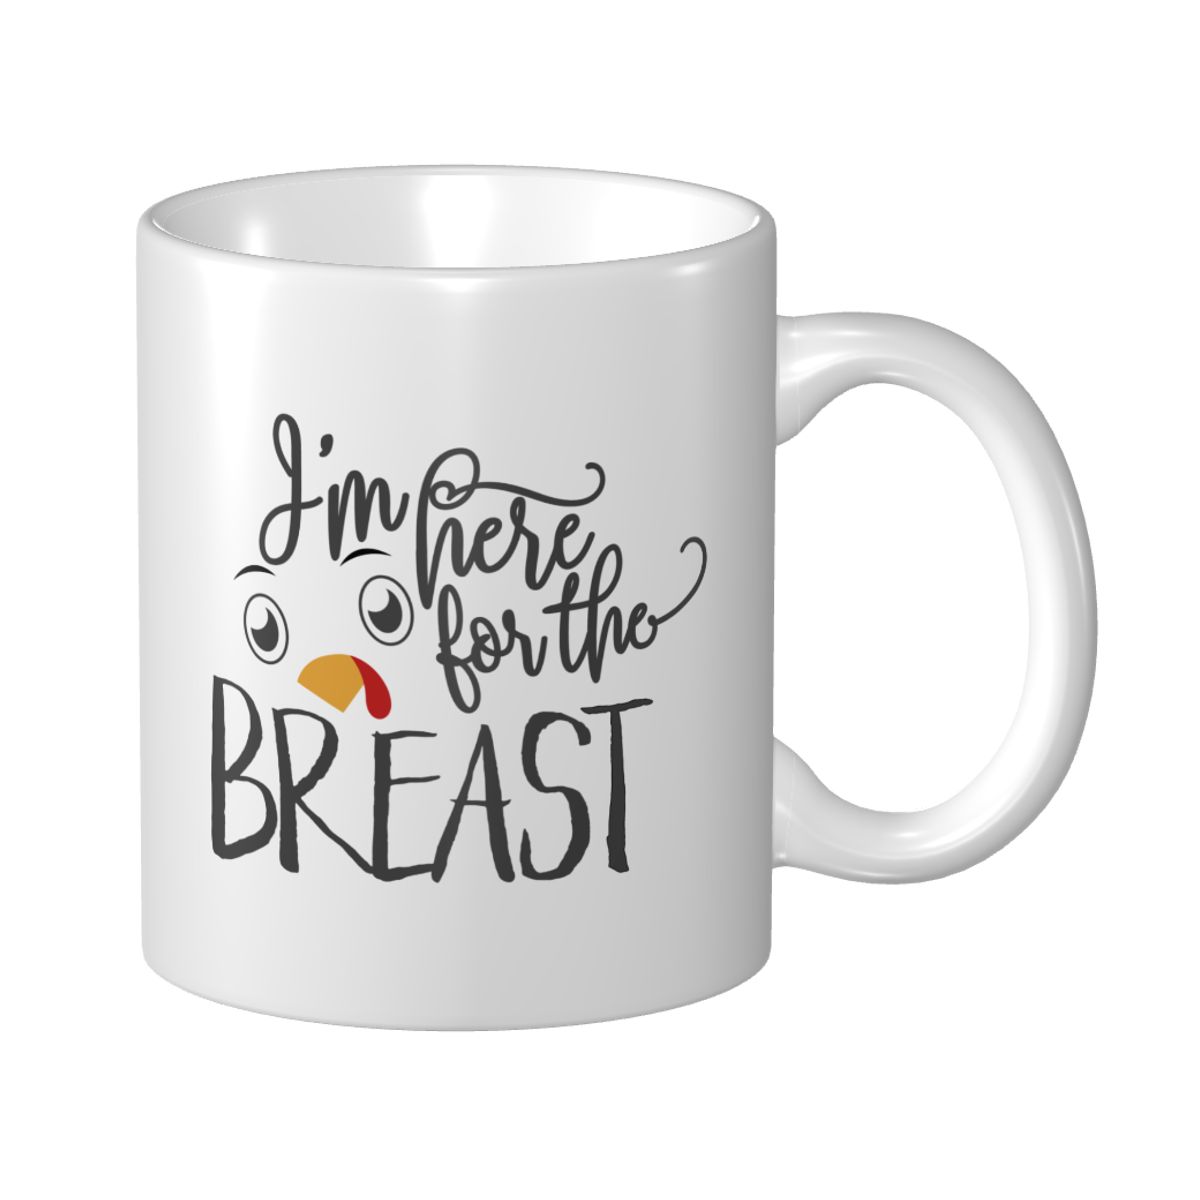 I'm Here for the Breast Ceramic Mug